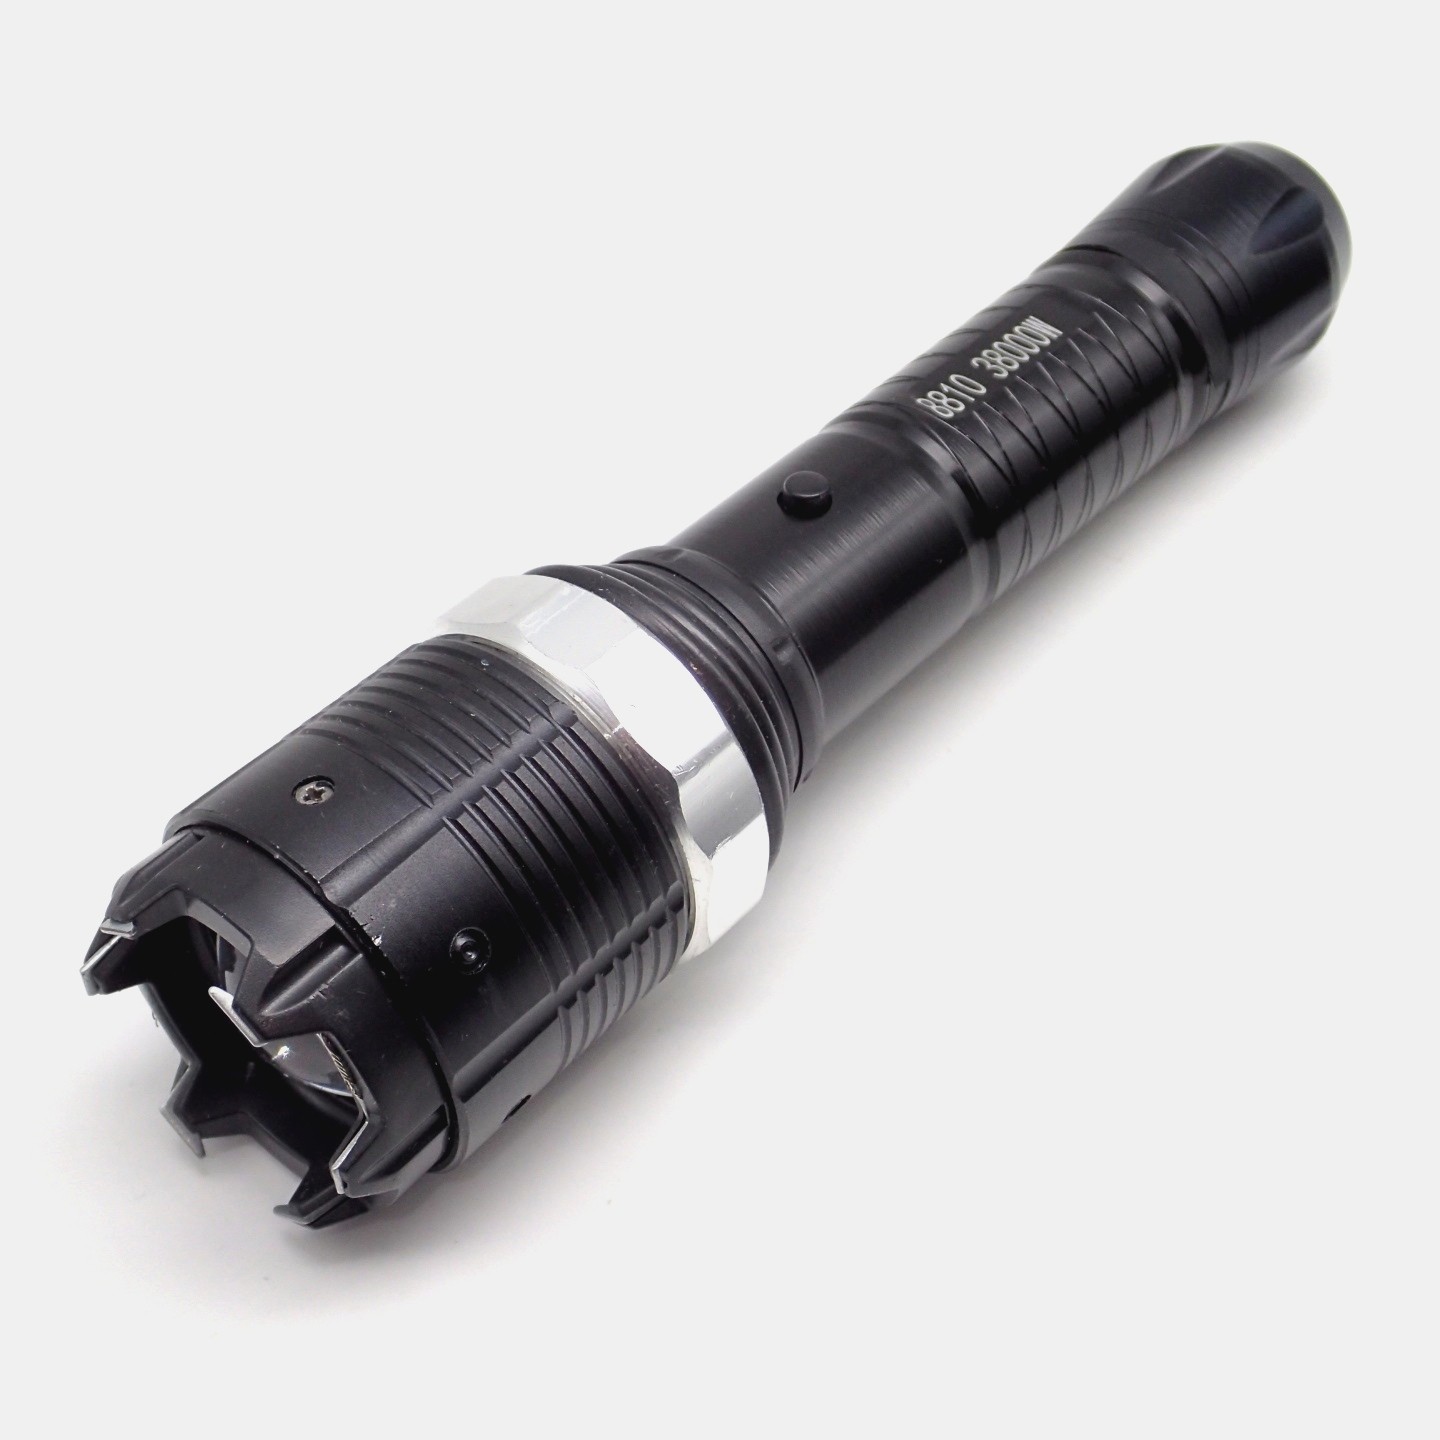 https://darkstreet.biz/11080/s26-elektroschocker-led-flashlight-zoom-4-in-1-hy-8810.jpg